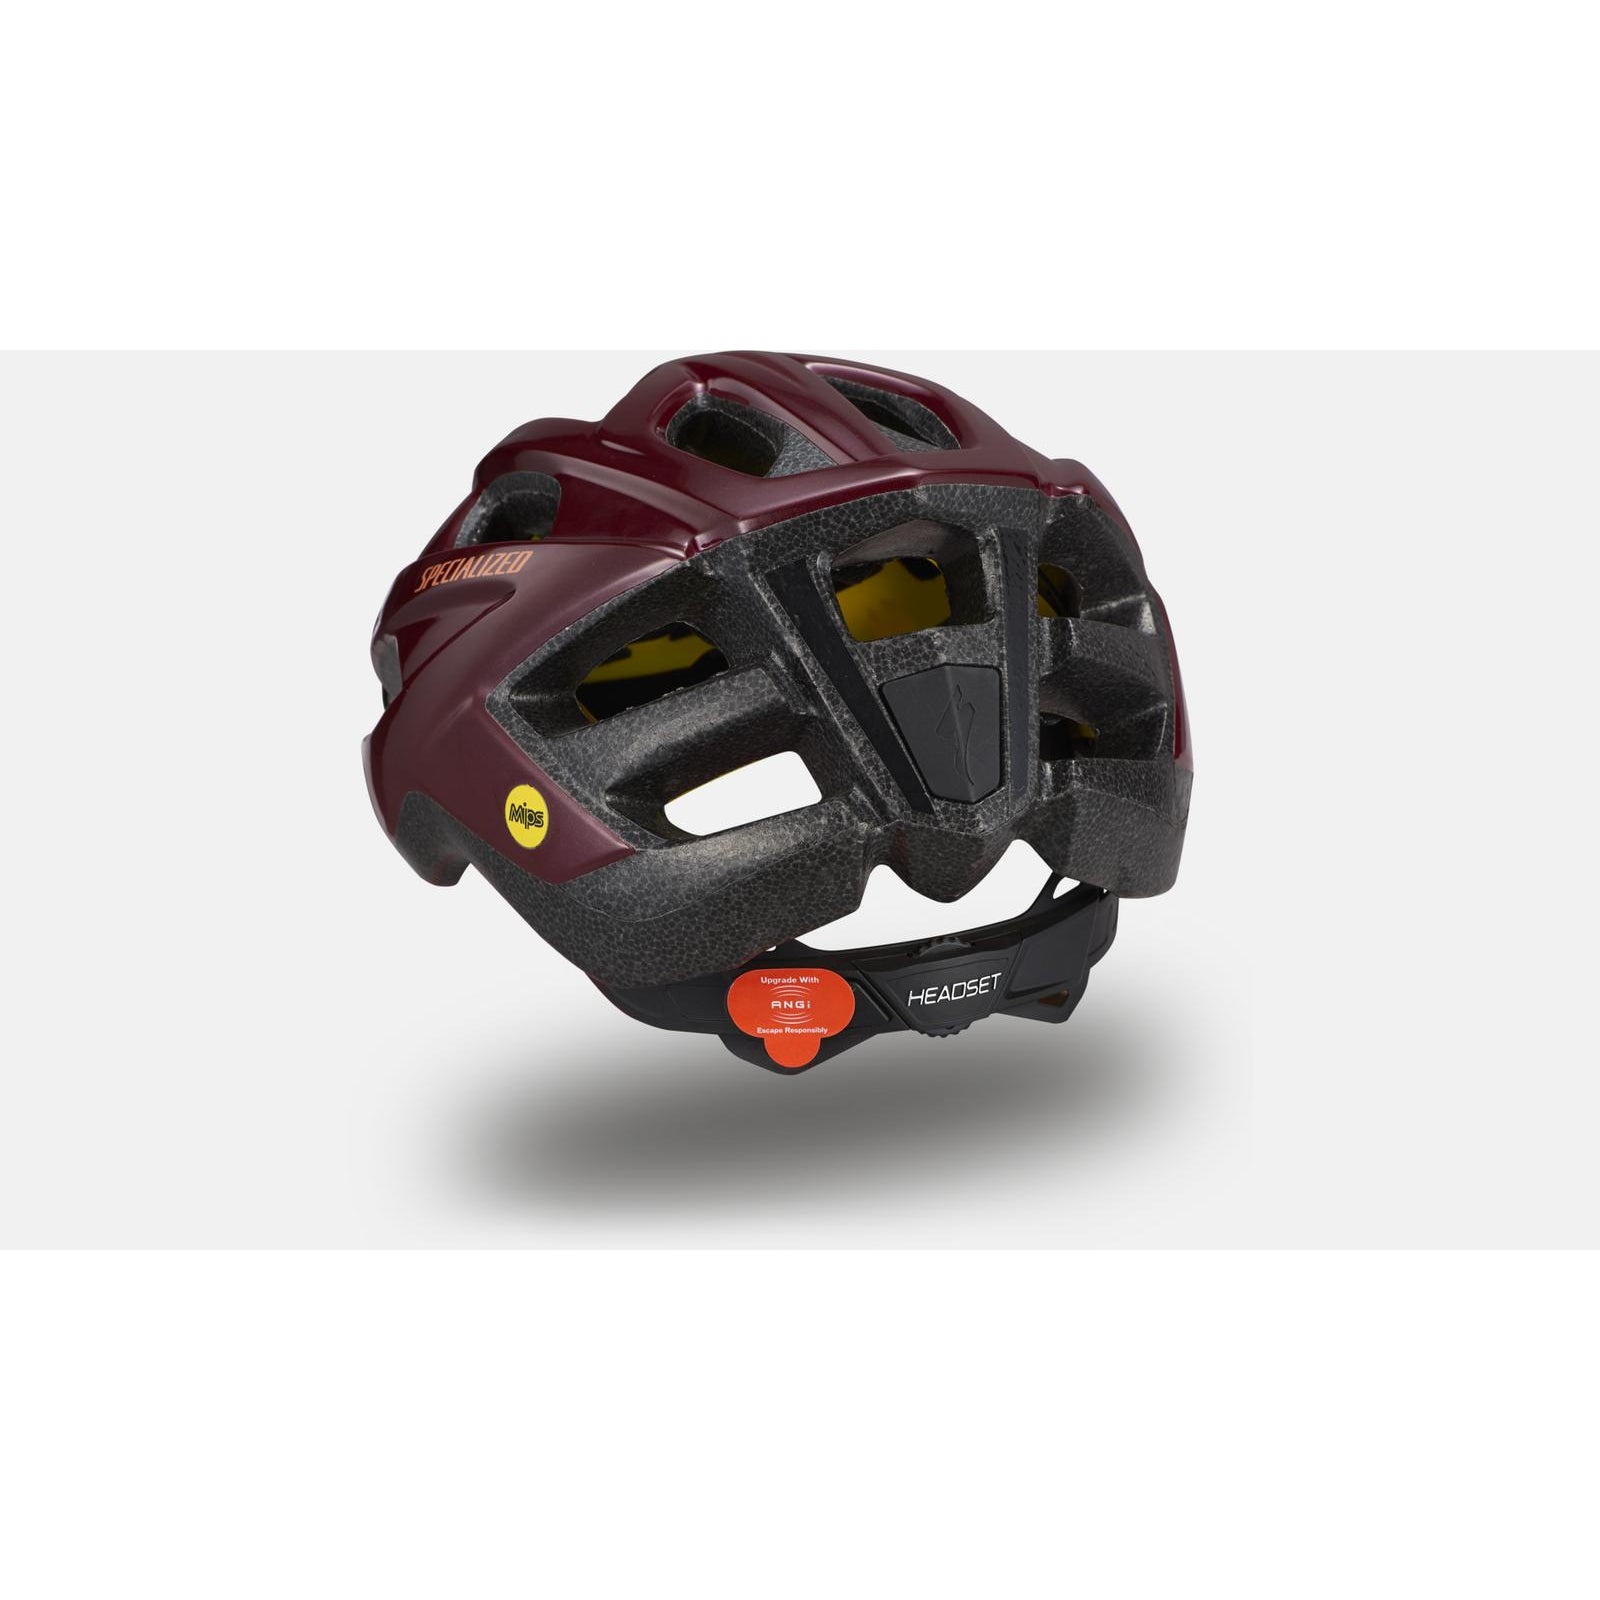 Chamonix 2 Road Bike Helmet